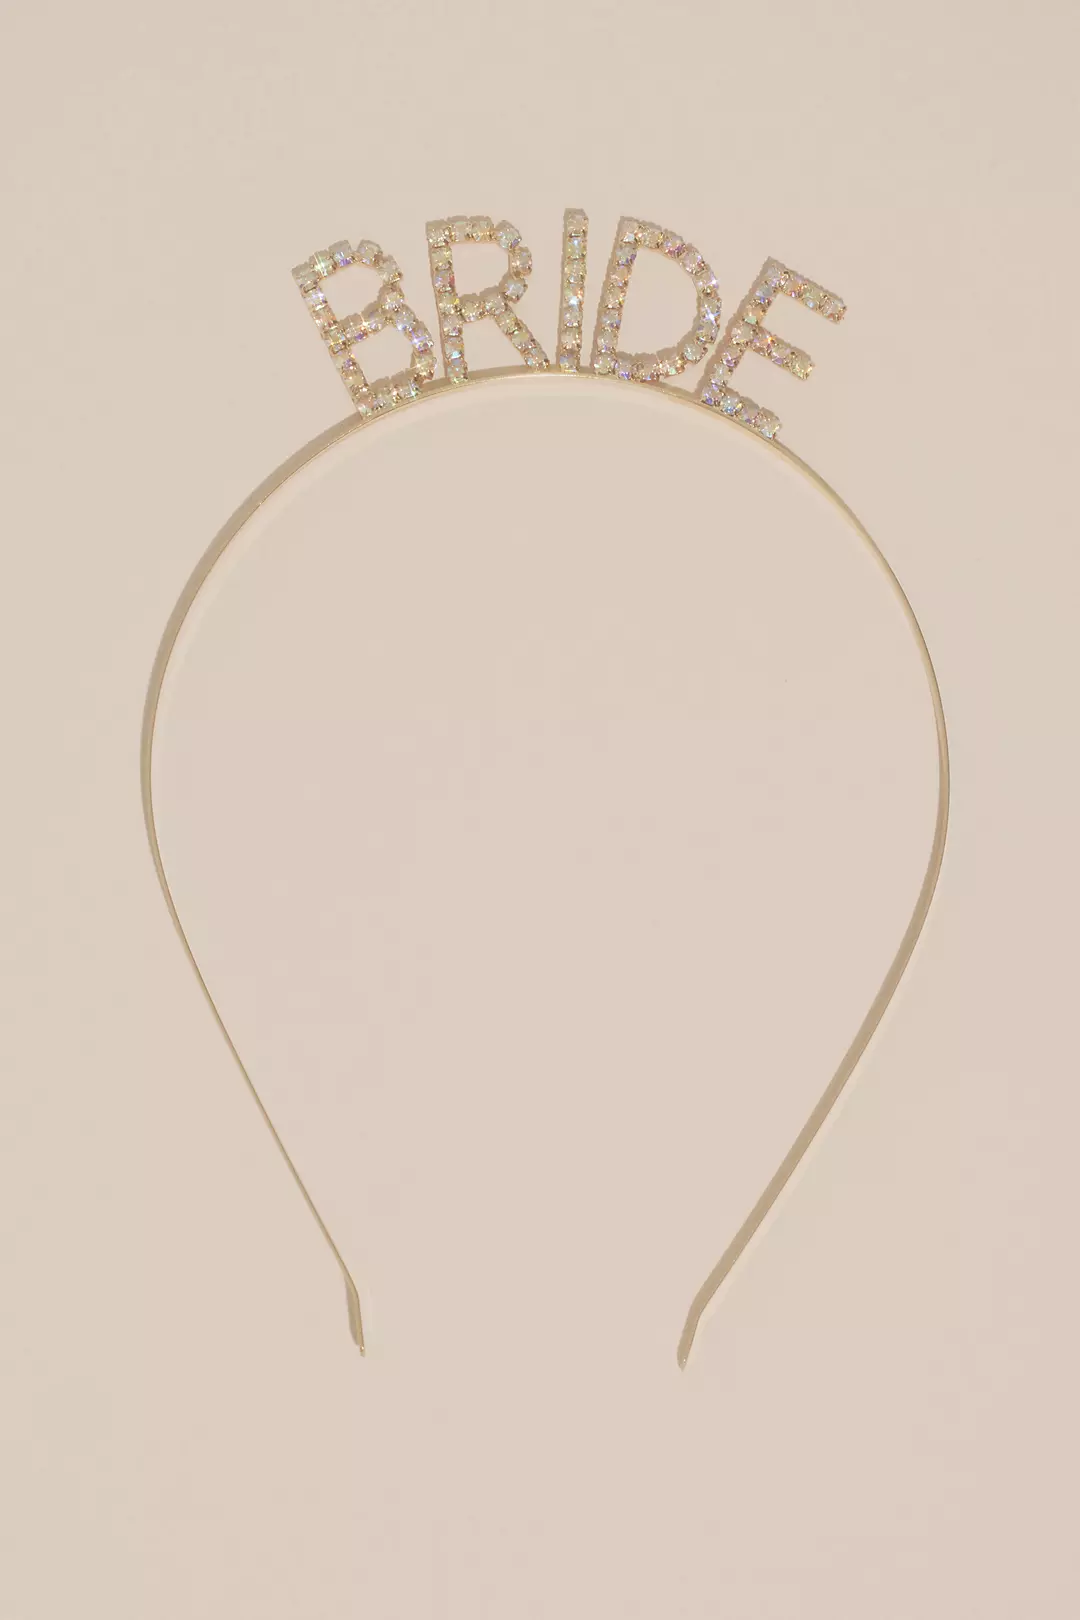 Rhinestone Bride Headband Image